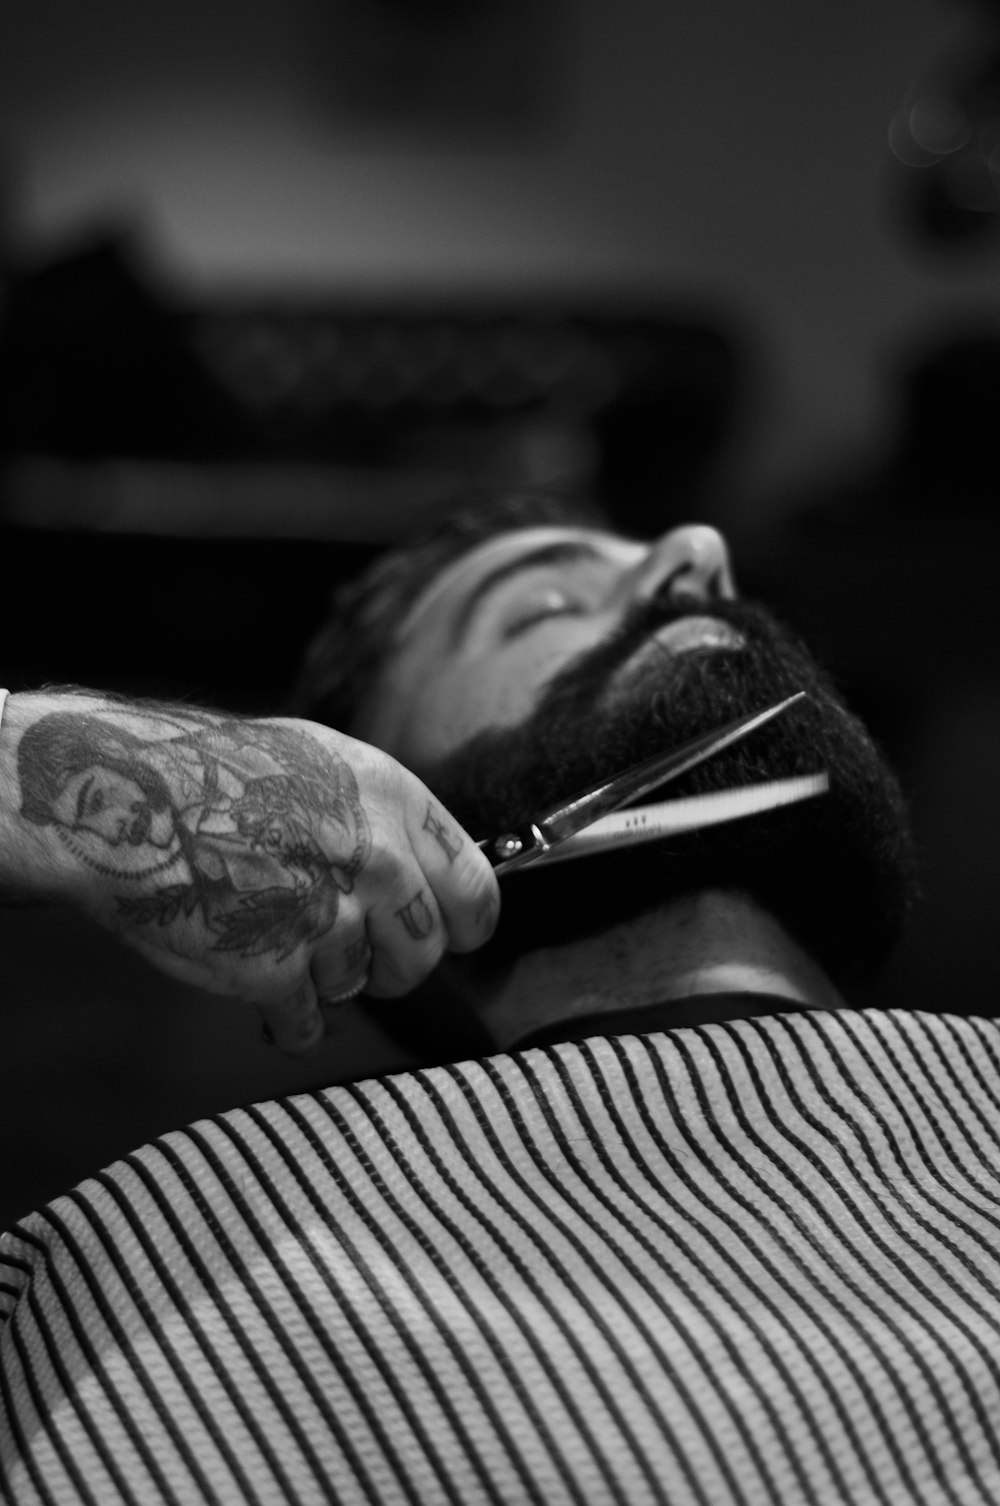 500+ Barber Pictures [HD] | Download Free Images on Unsplash